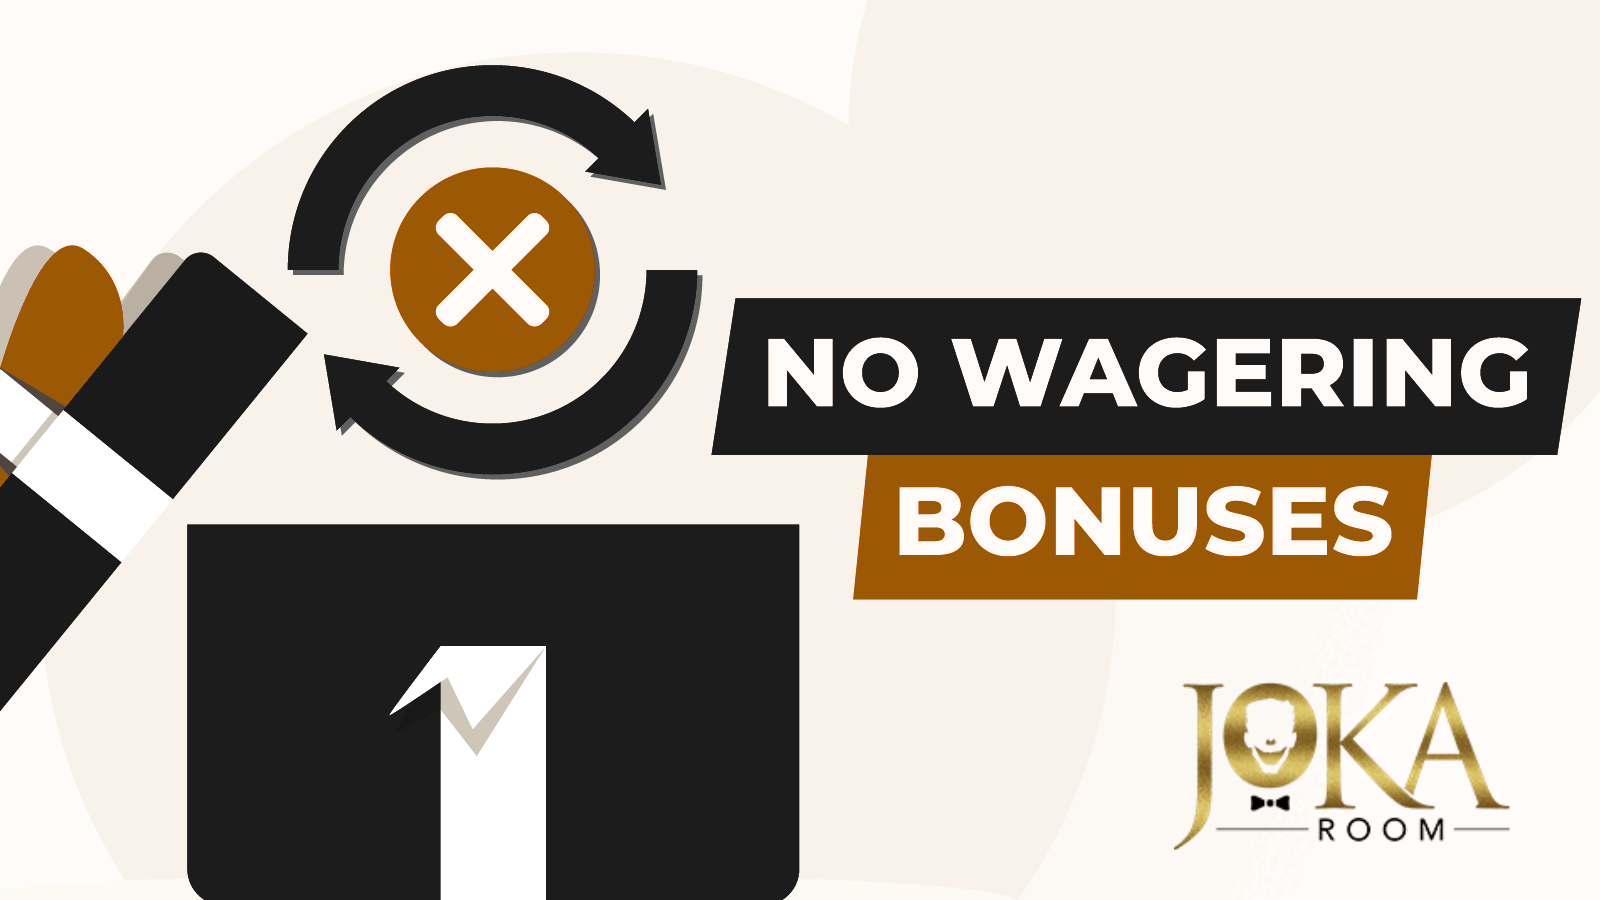 No Wagering Casino Bonuses